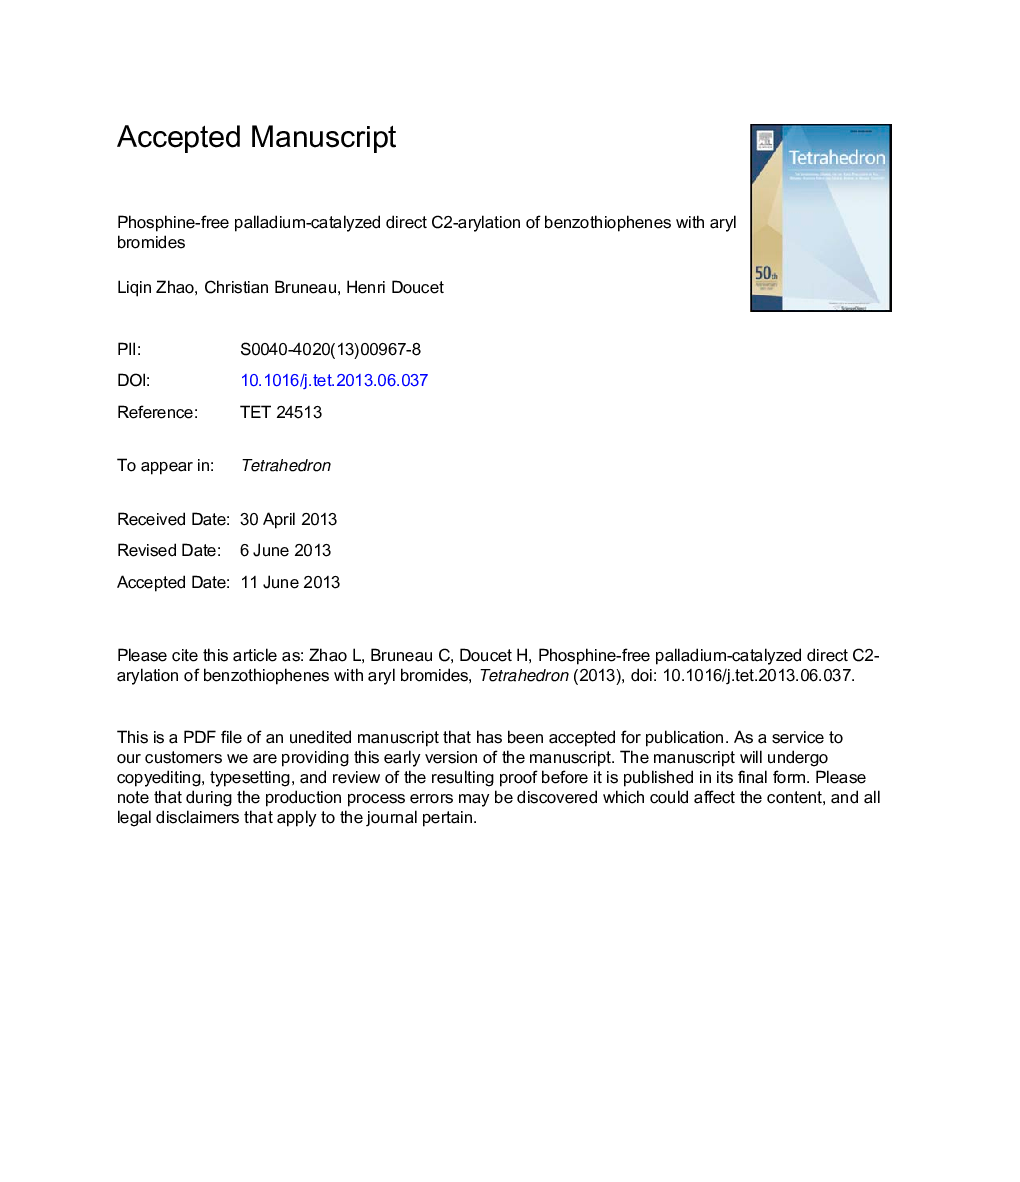 Phosphine-free palladium-catalysed direct C2-arylation of benzothiophenes with aryl bromides